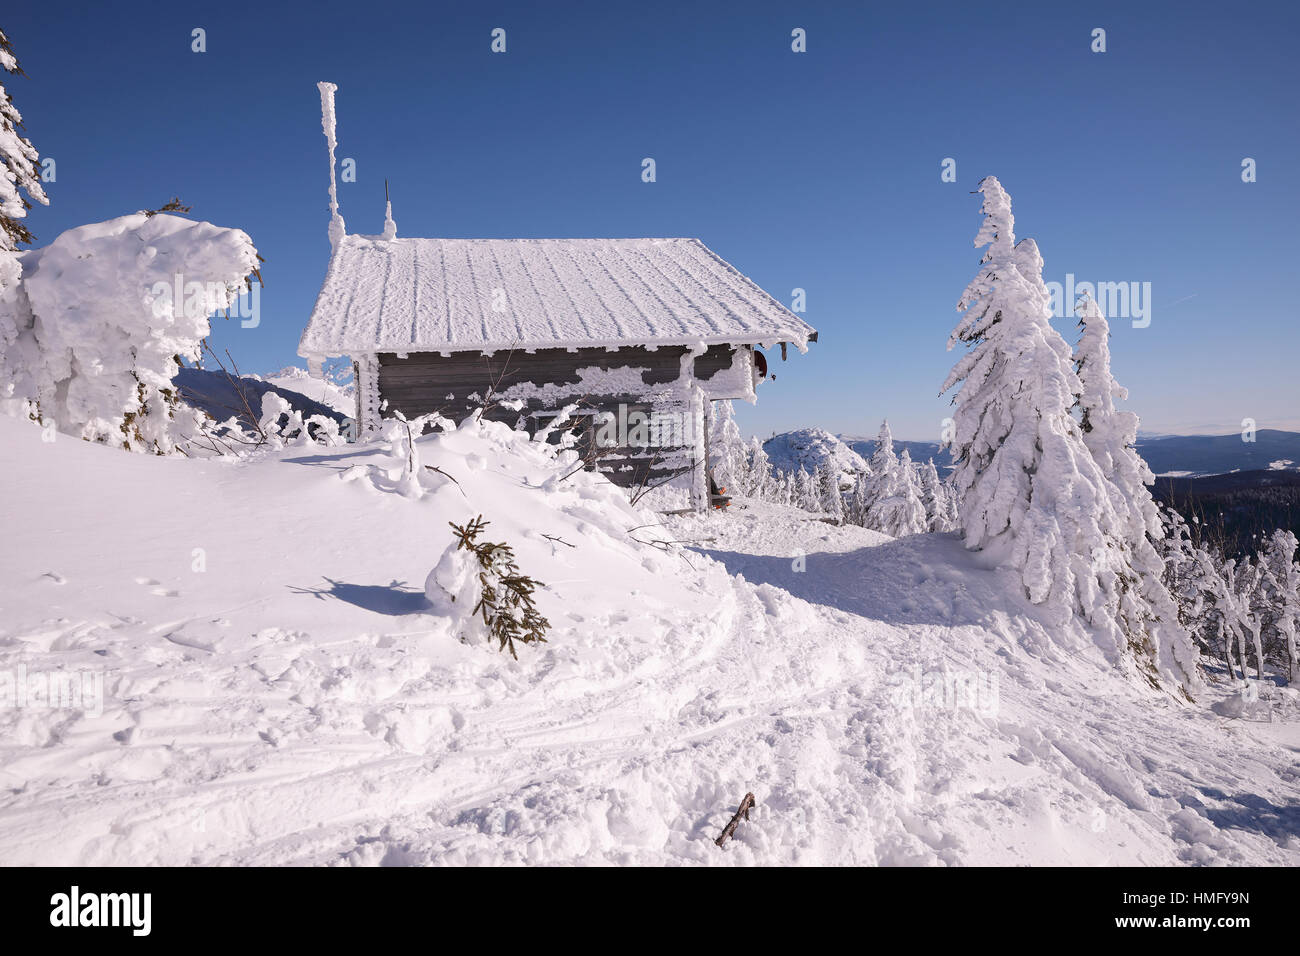 Baite in legno ricoperta di neve congelata. Grosser Arber, Bayerisch Eisenstein, Germania. Inverno vertice nevoso di Mt. Grosser Arber a ribalta bavarese Foto Stock